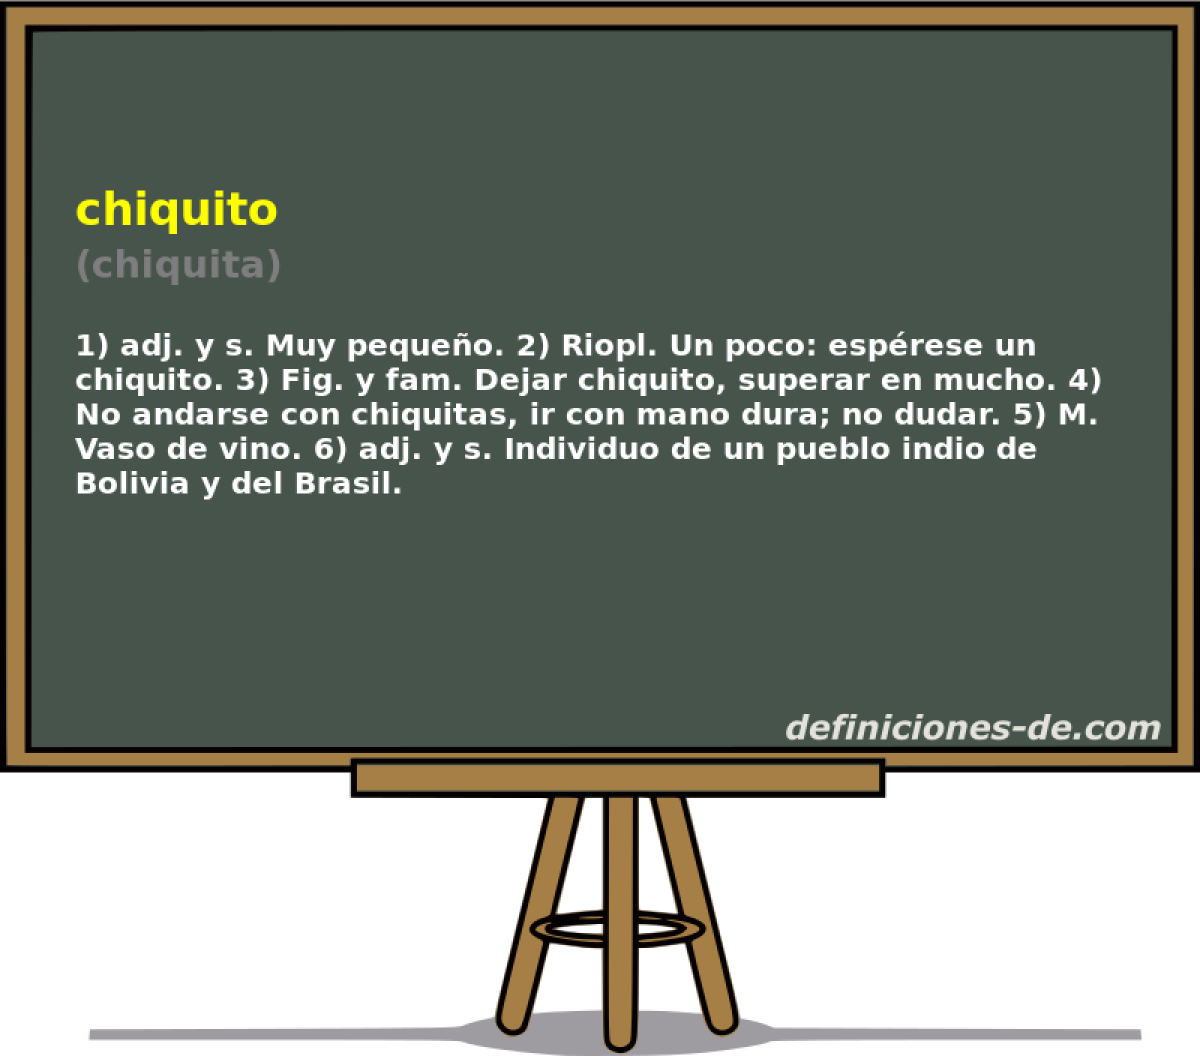 chiquito (chiquita)